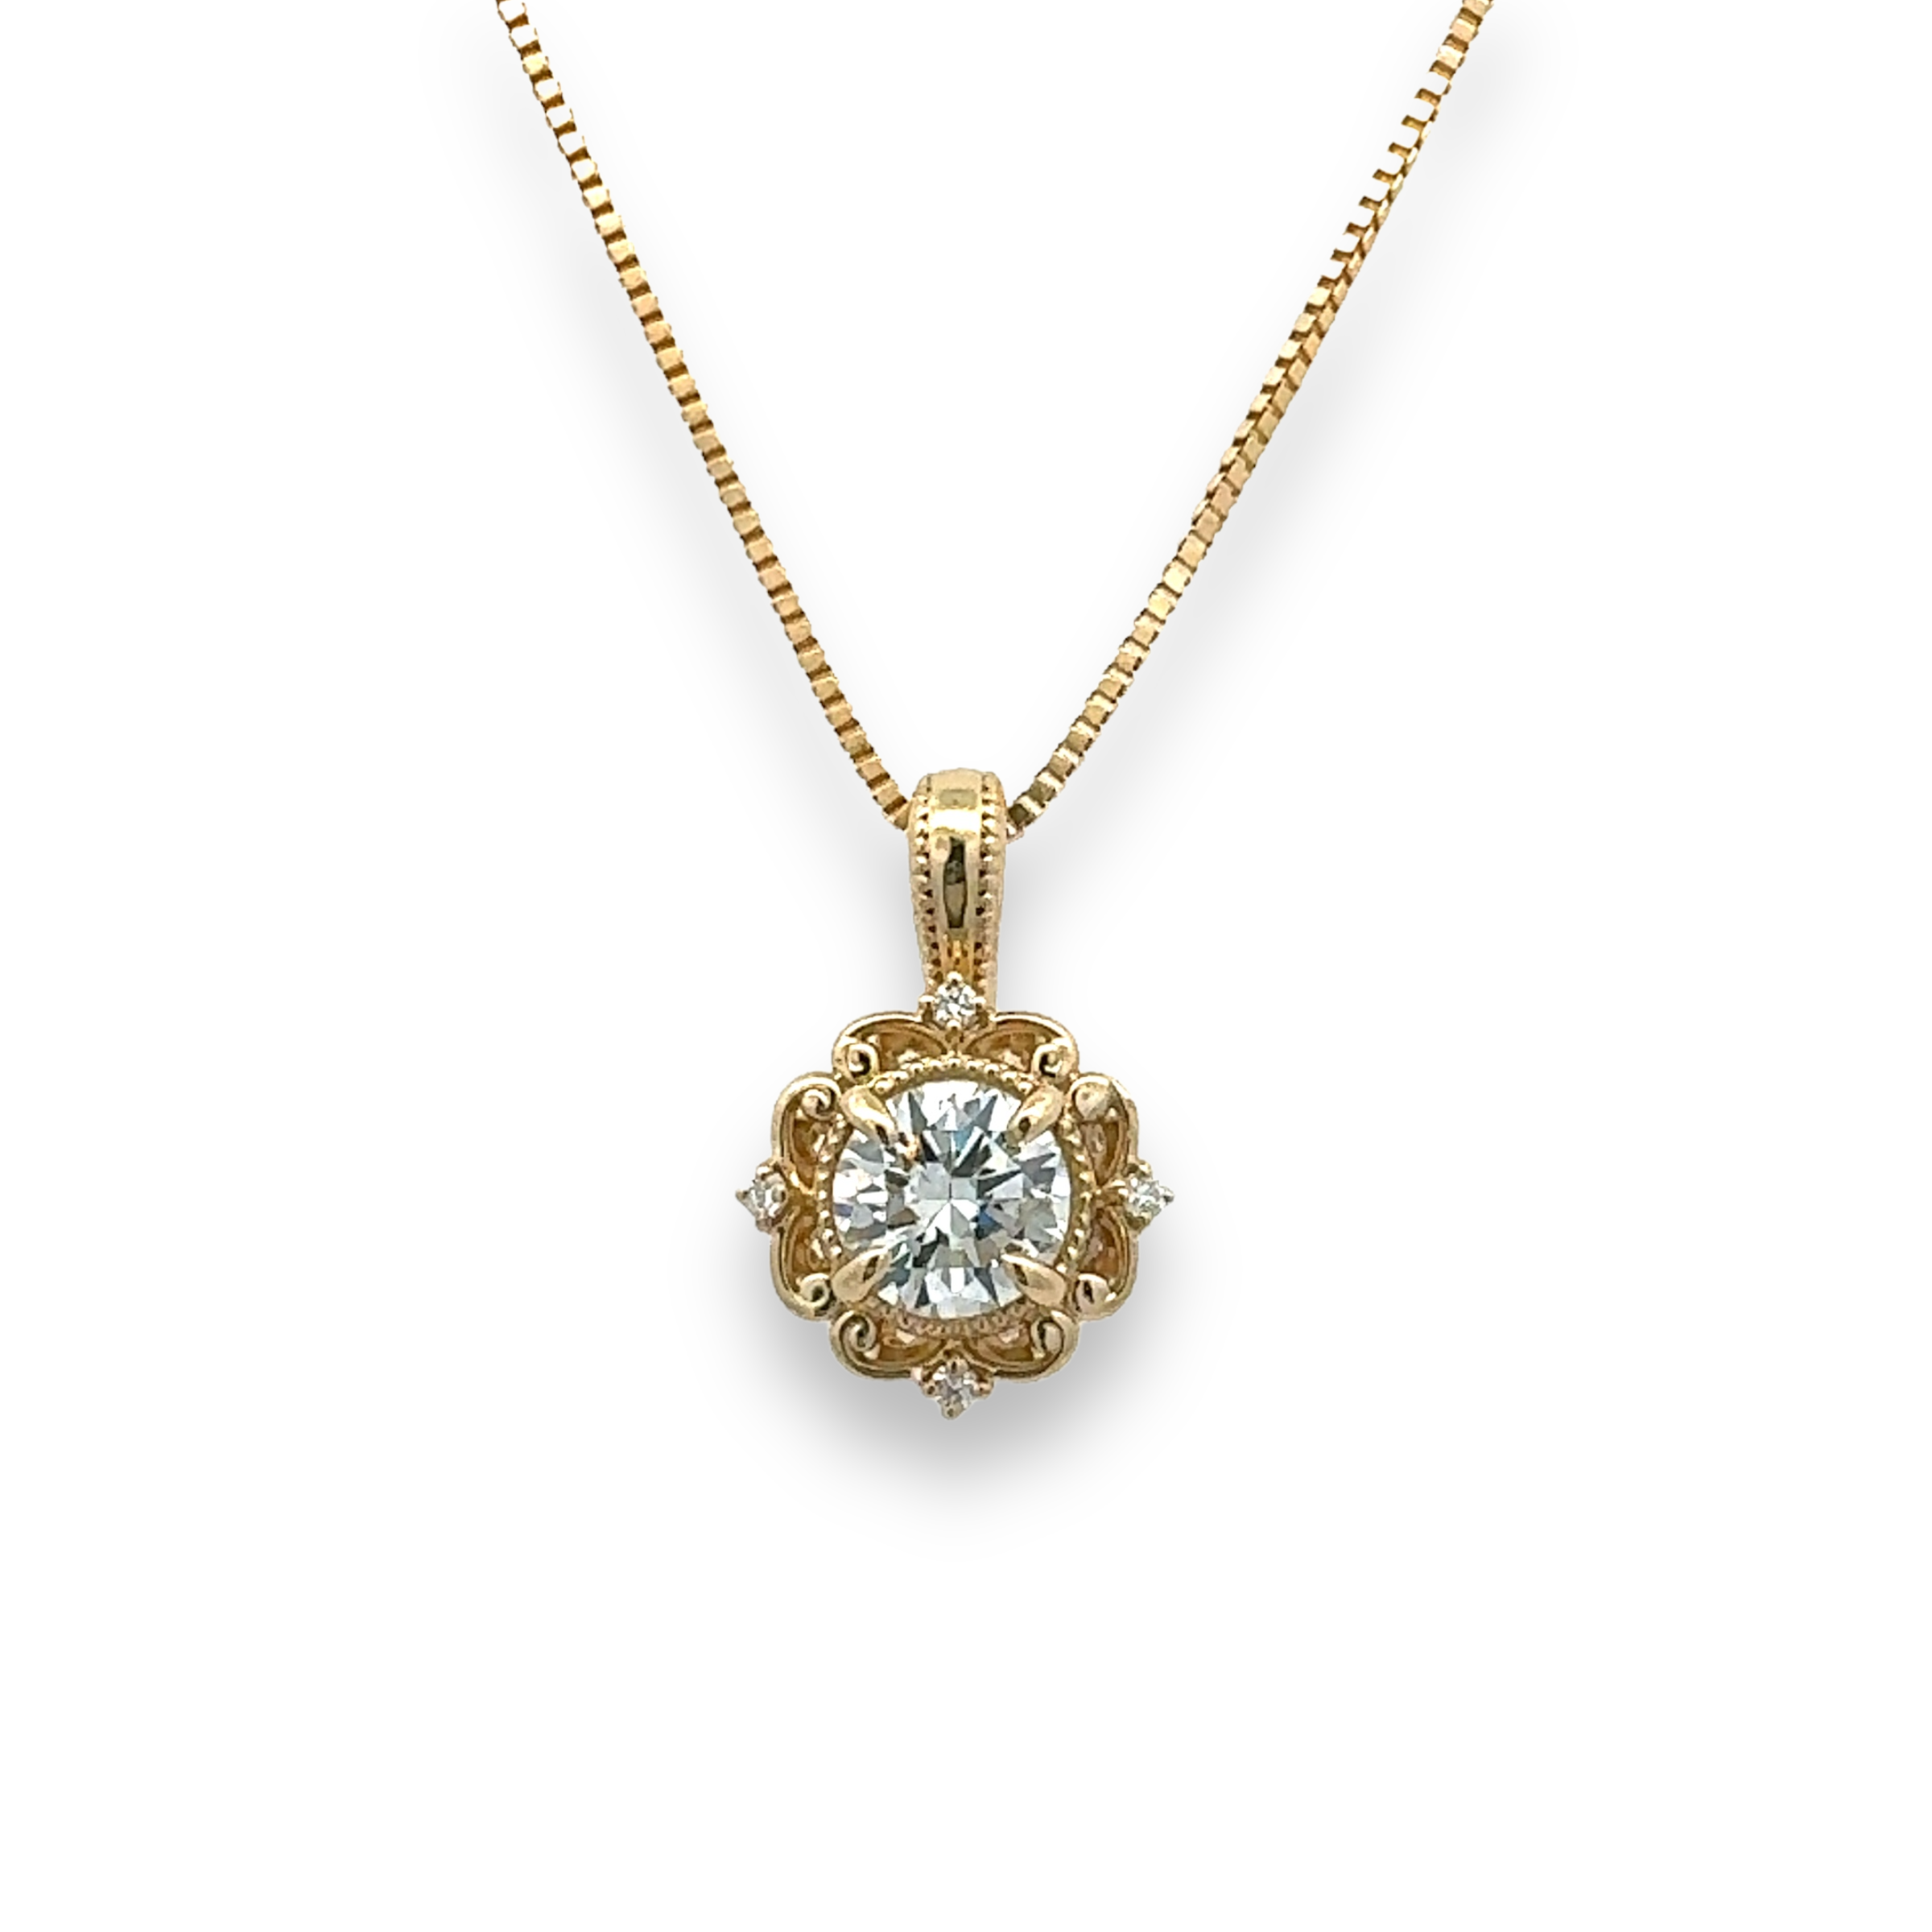 Vintage-Inspired Diamond Pendant